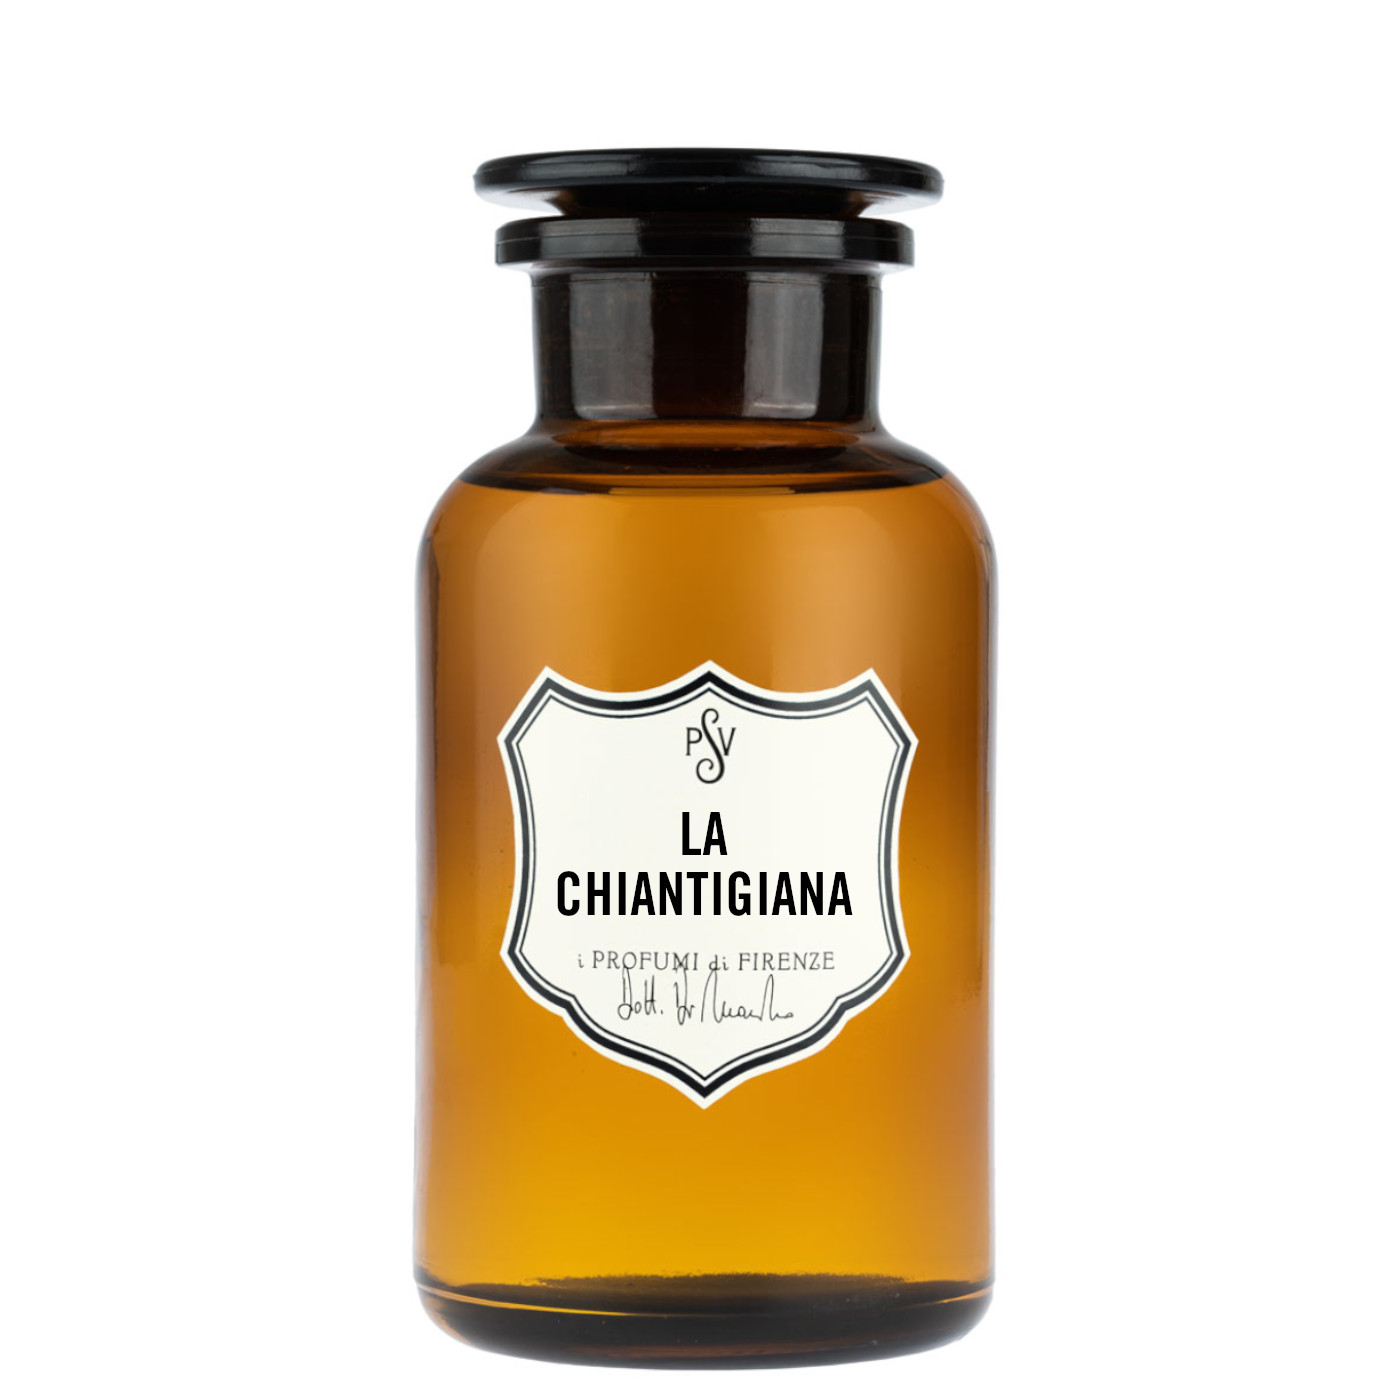 LA CHIANTIGIANA - Home Fragrance-4497